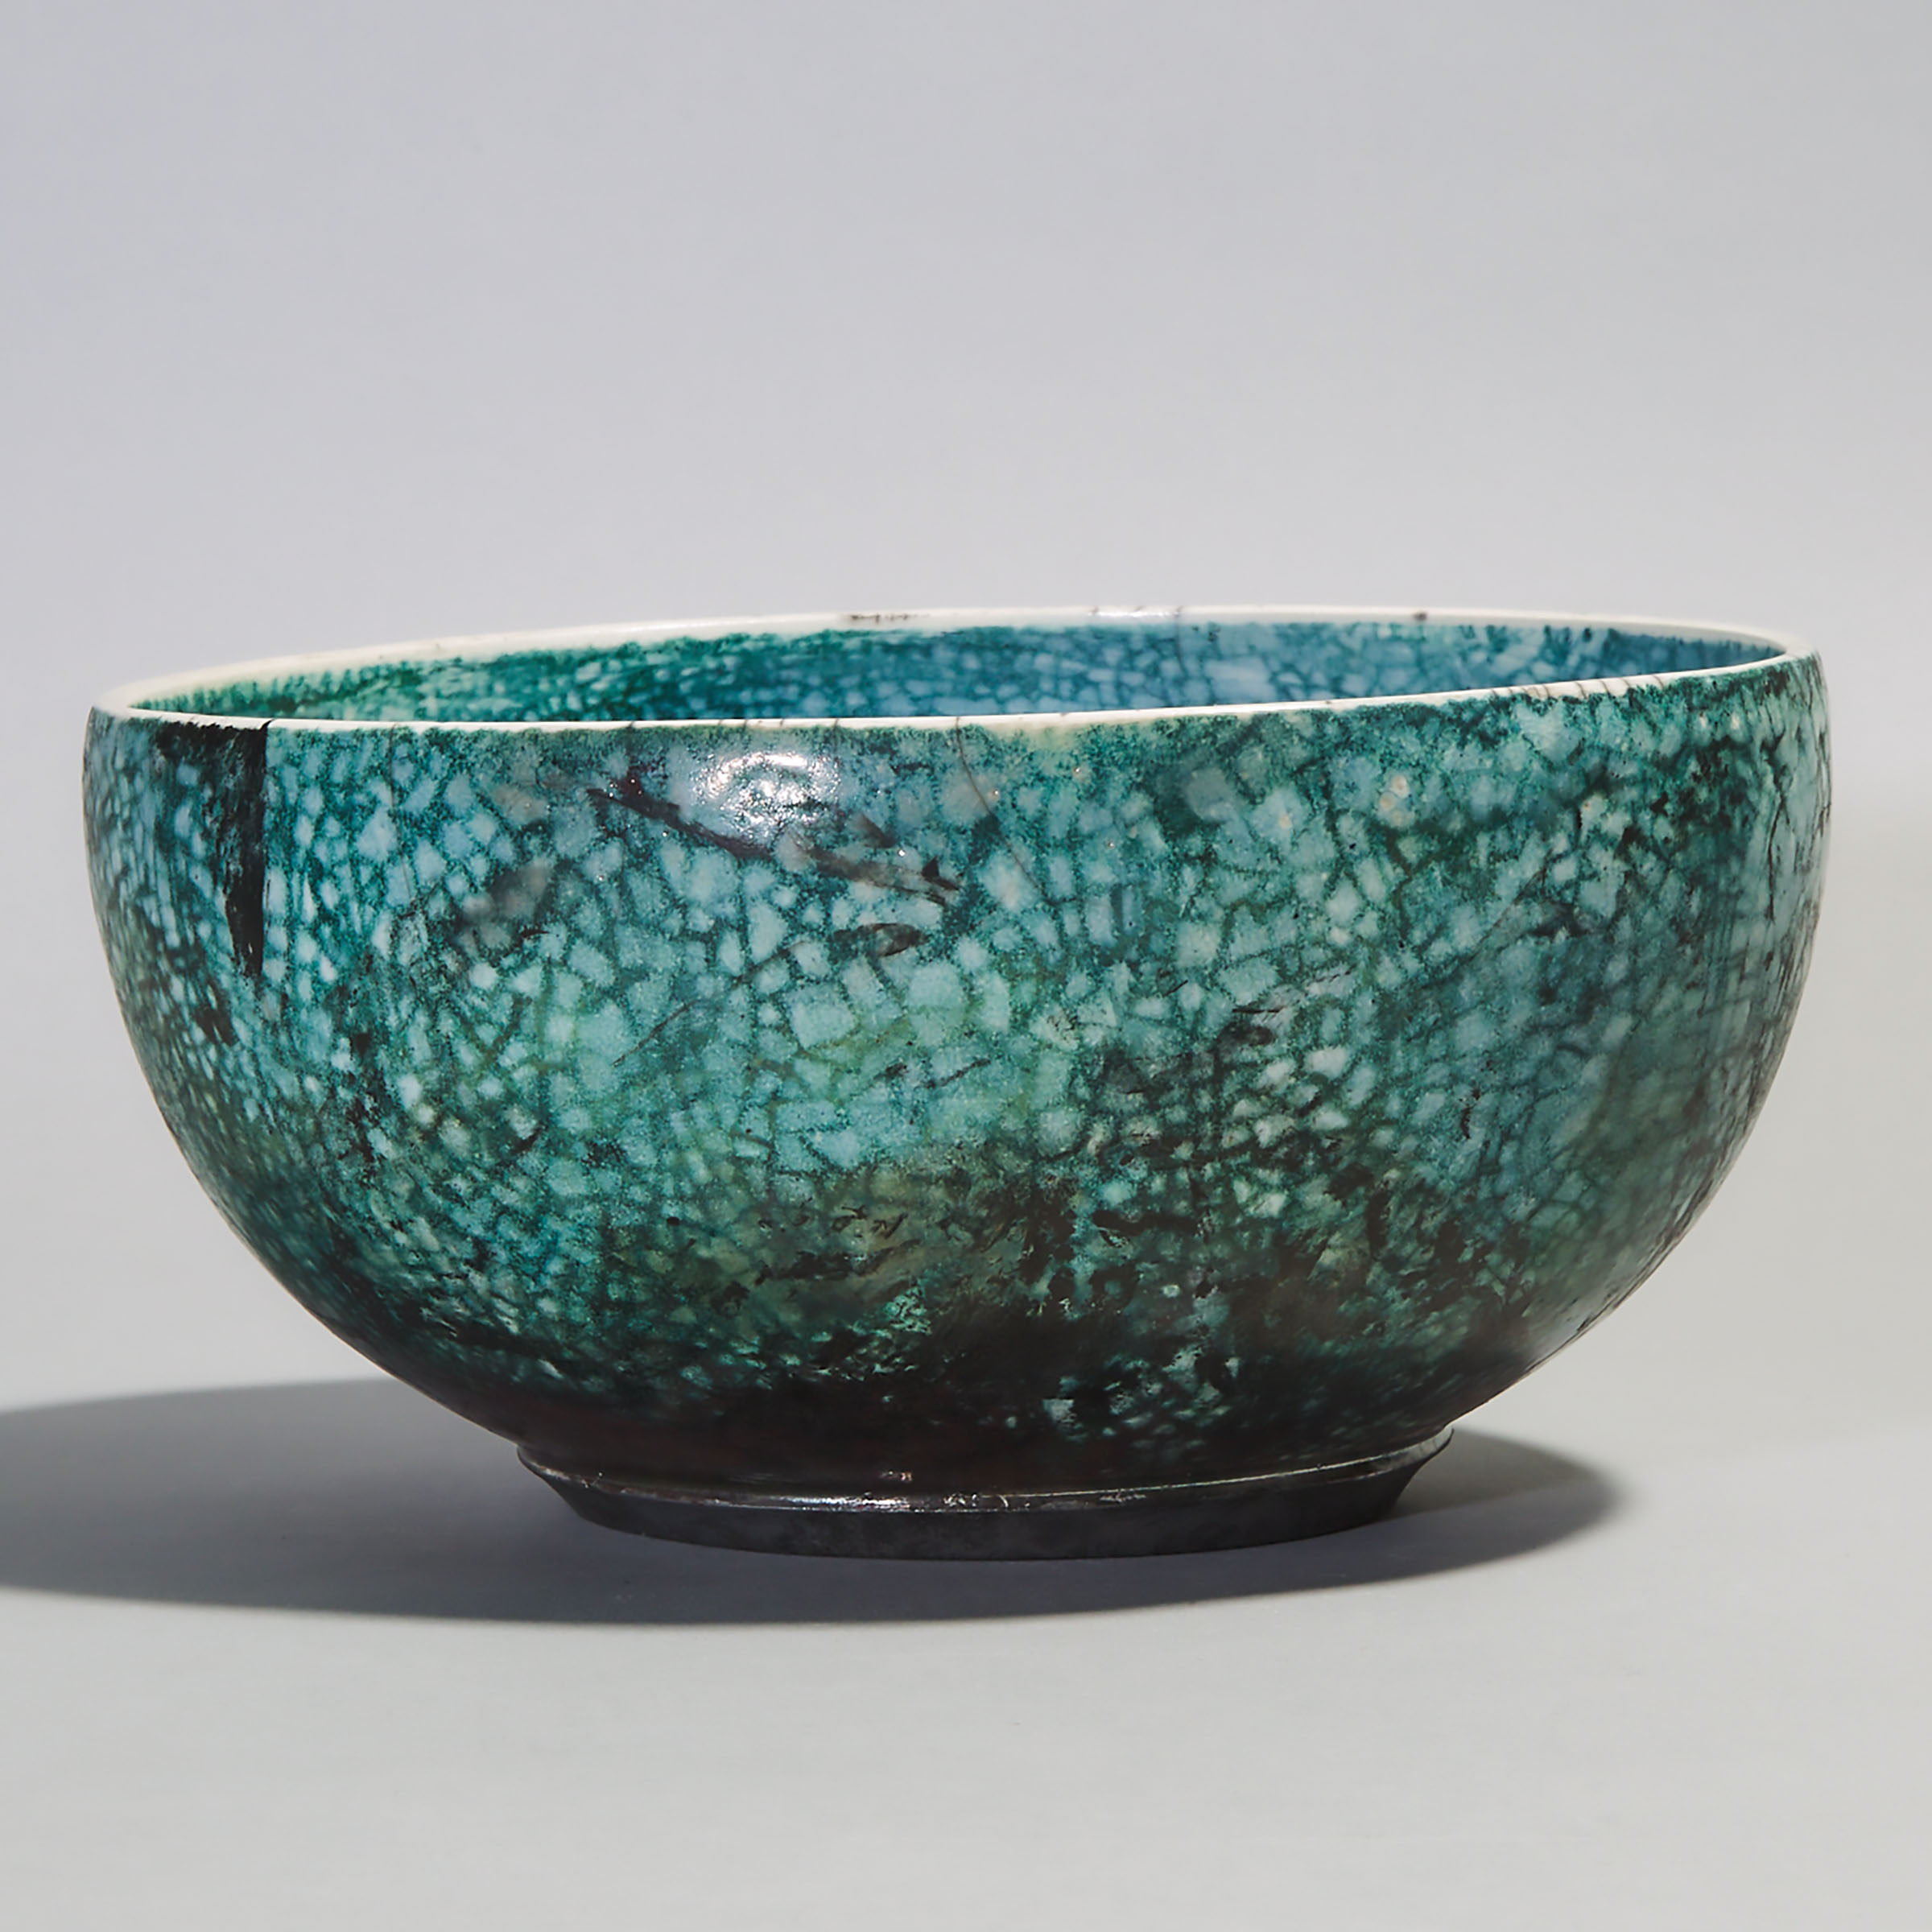 Susan Wintrop (Canadian, b.1953), Turquoise Crackle Glazed Bowl, c.1995